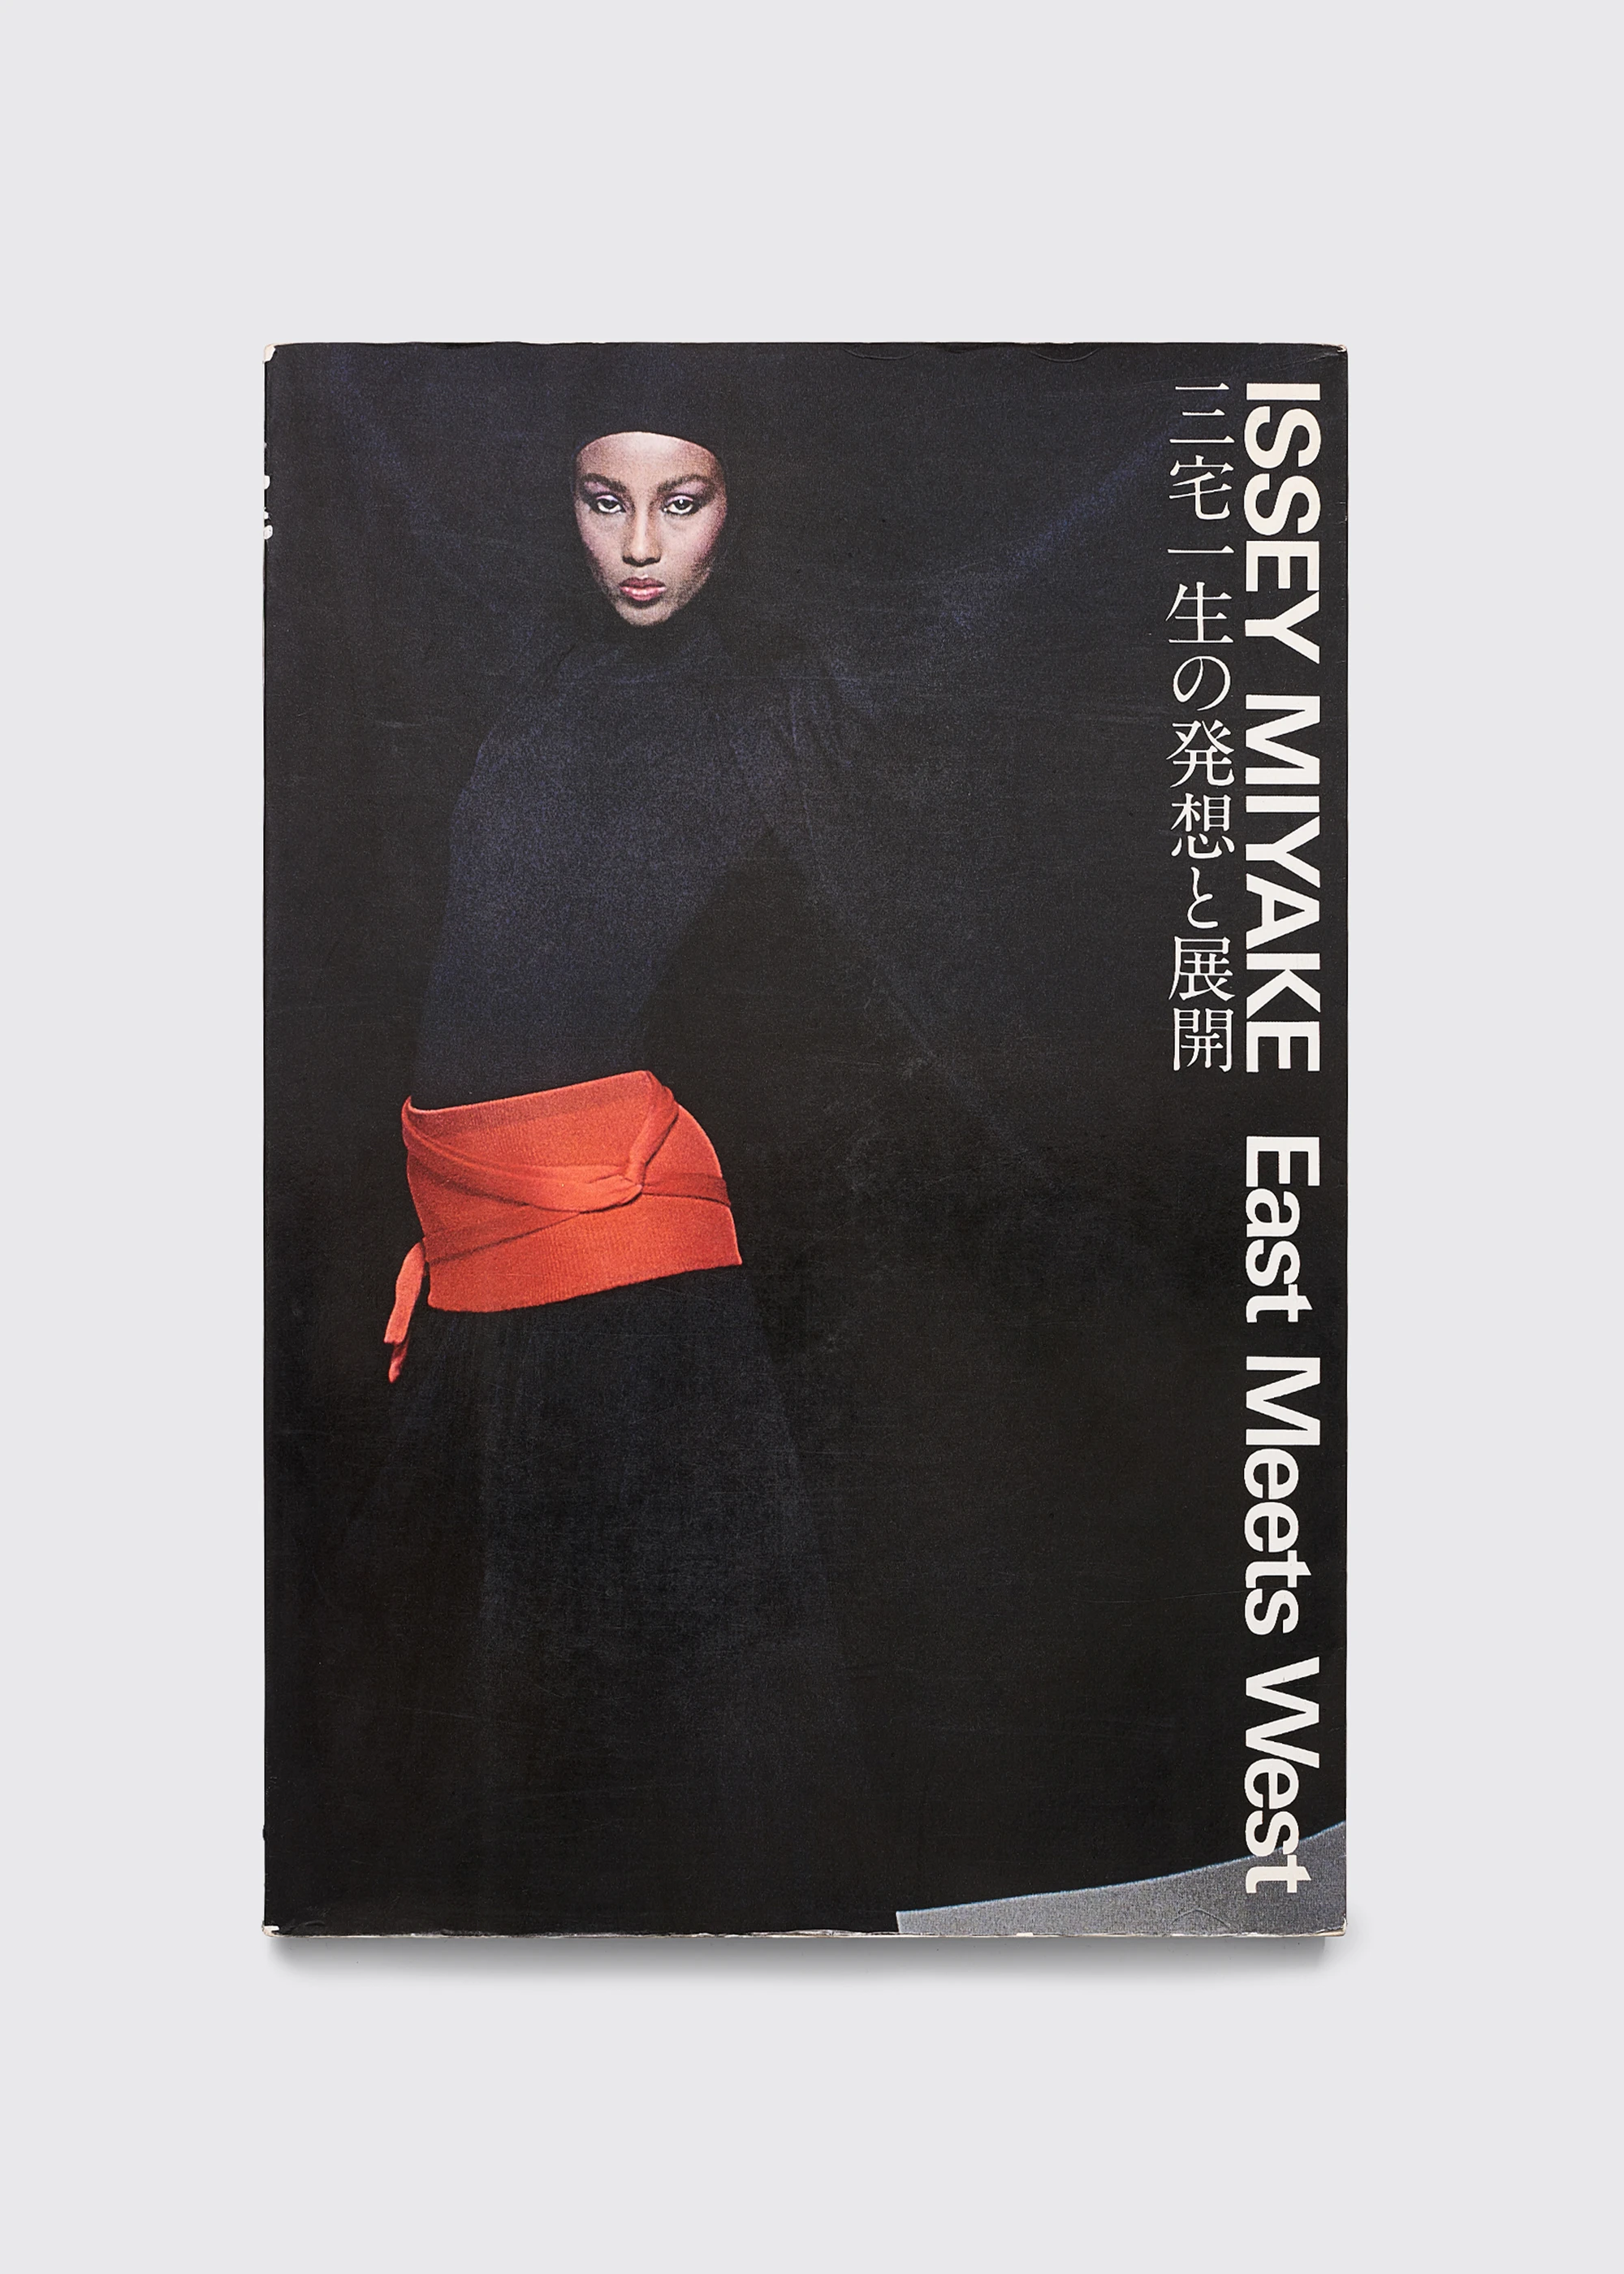 Très Bien, Souvenir, Issey Miyake East Meets West, Objects, , 2019